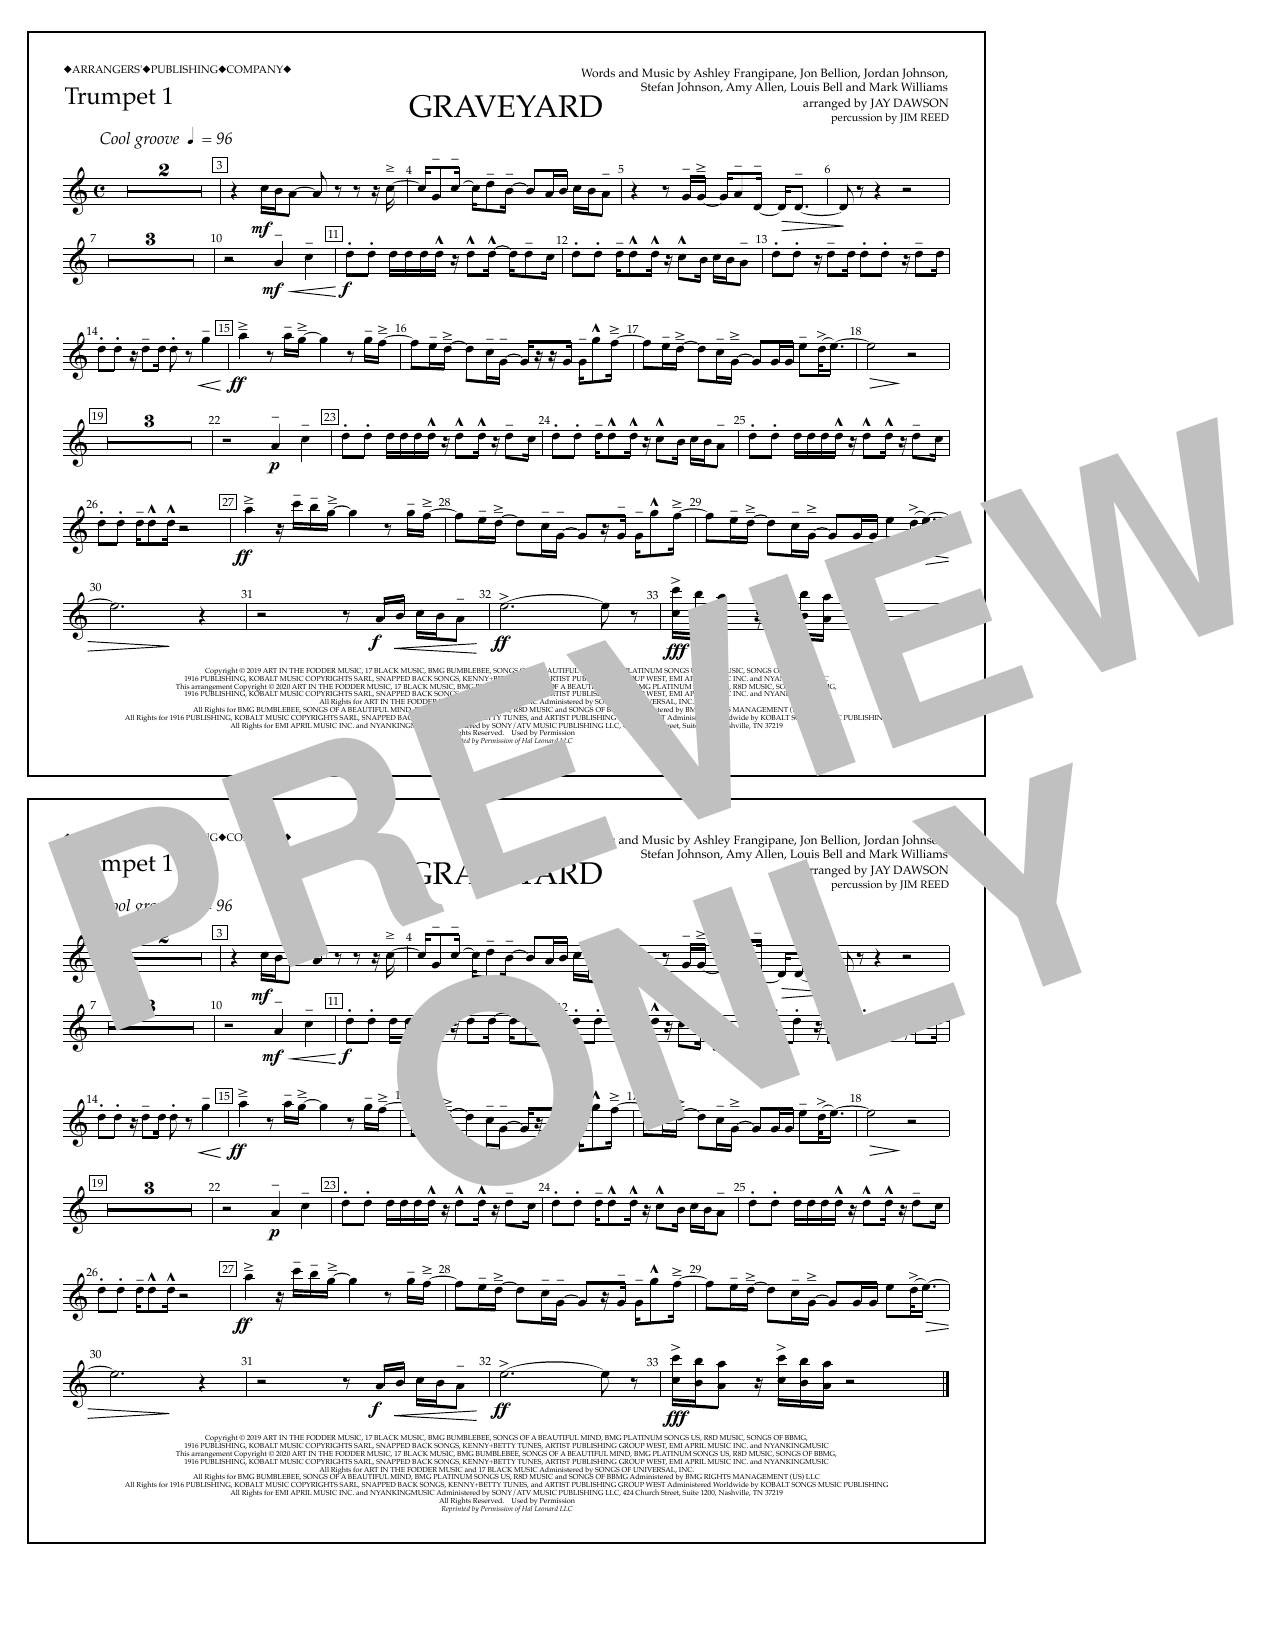 Download Halsey Graveyard (arr. Jay Dawson) - Trumpet 1 Sheet Music